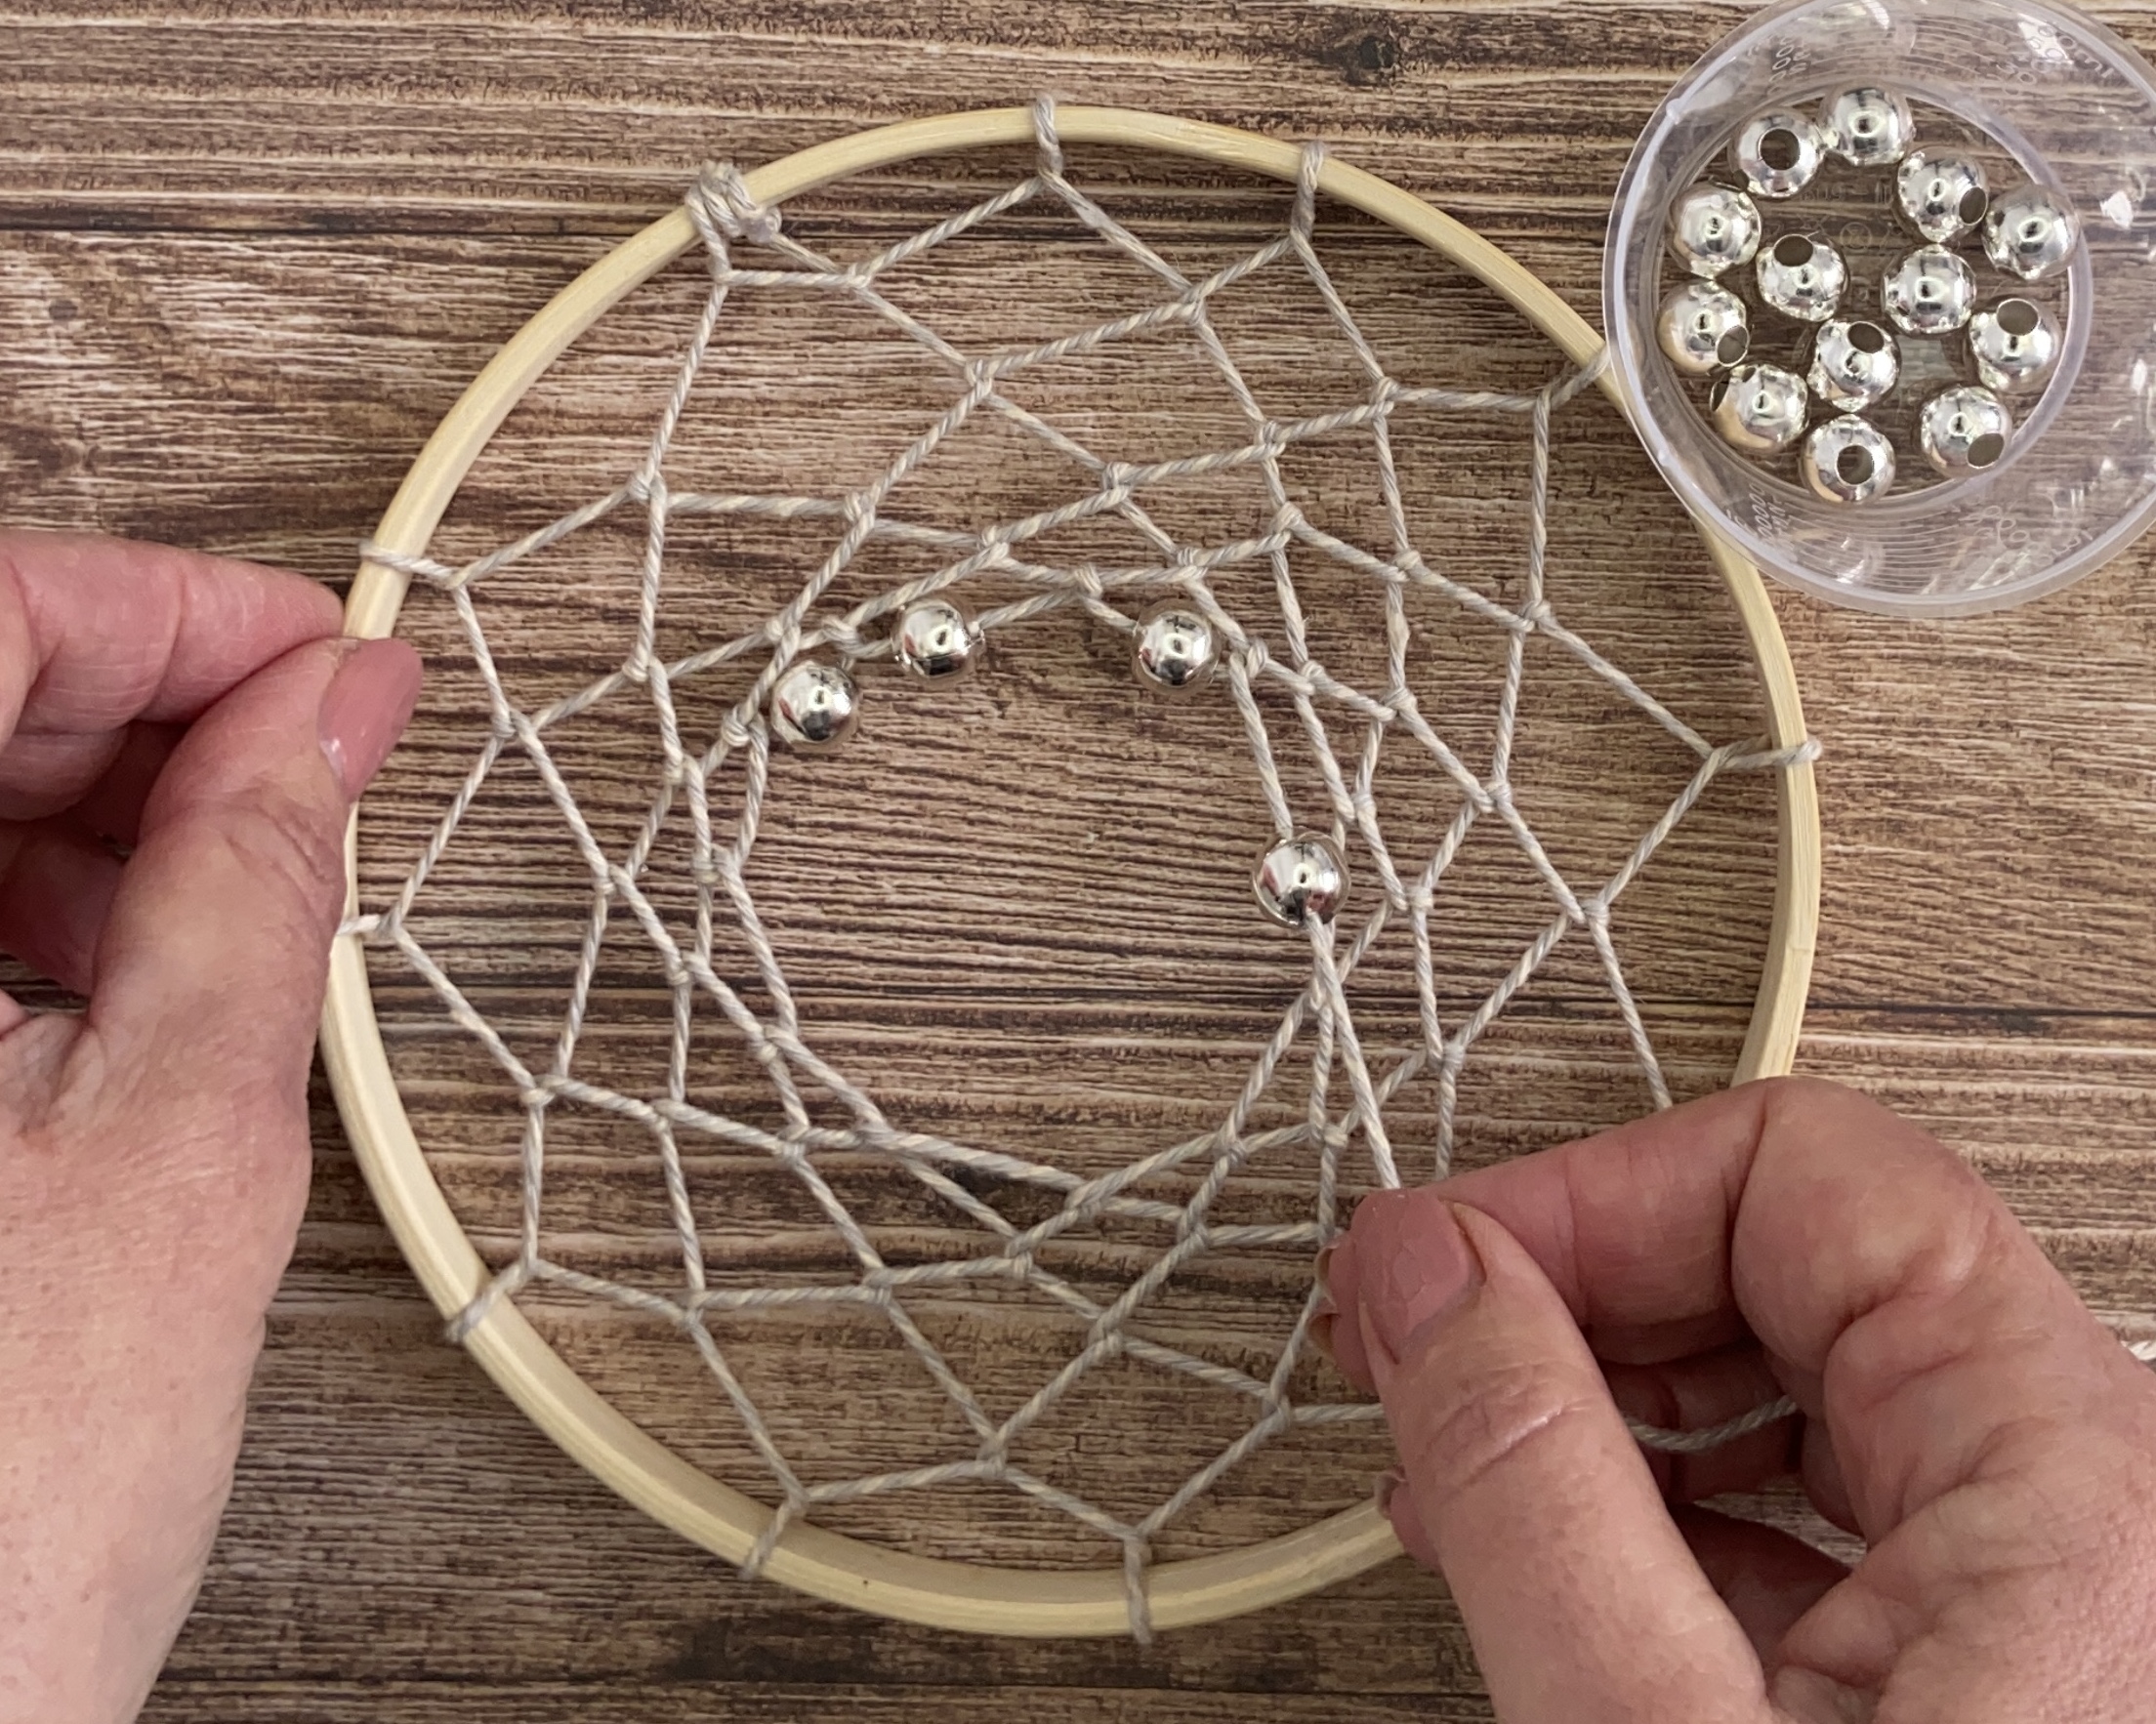 Hand threading bead on to woven loop on dreamcatcher